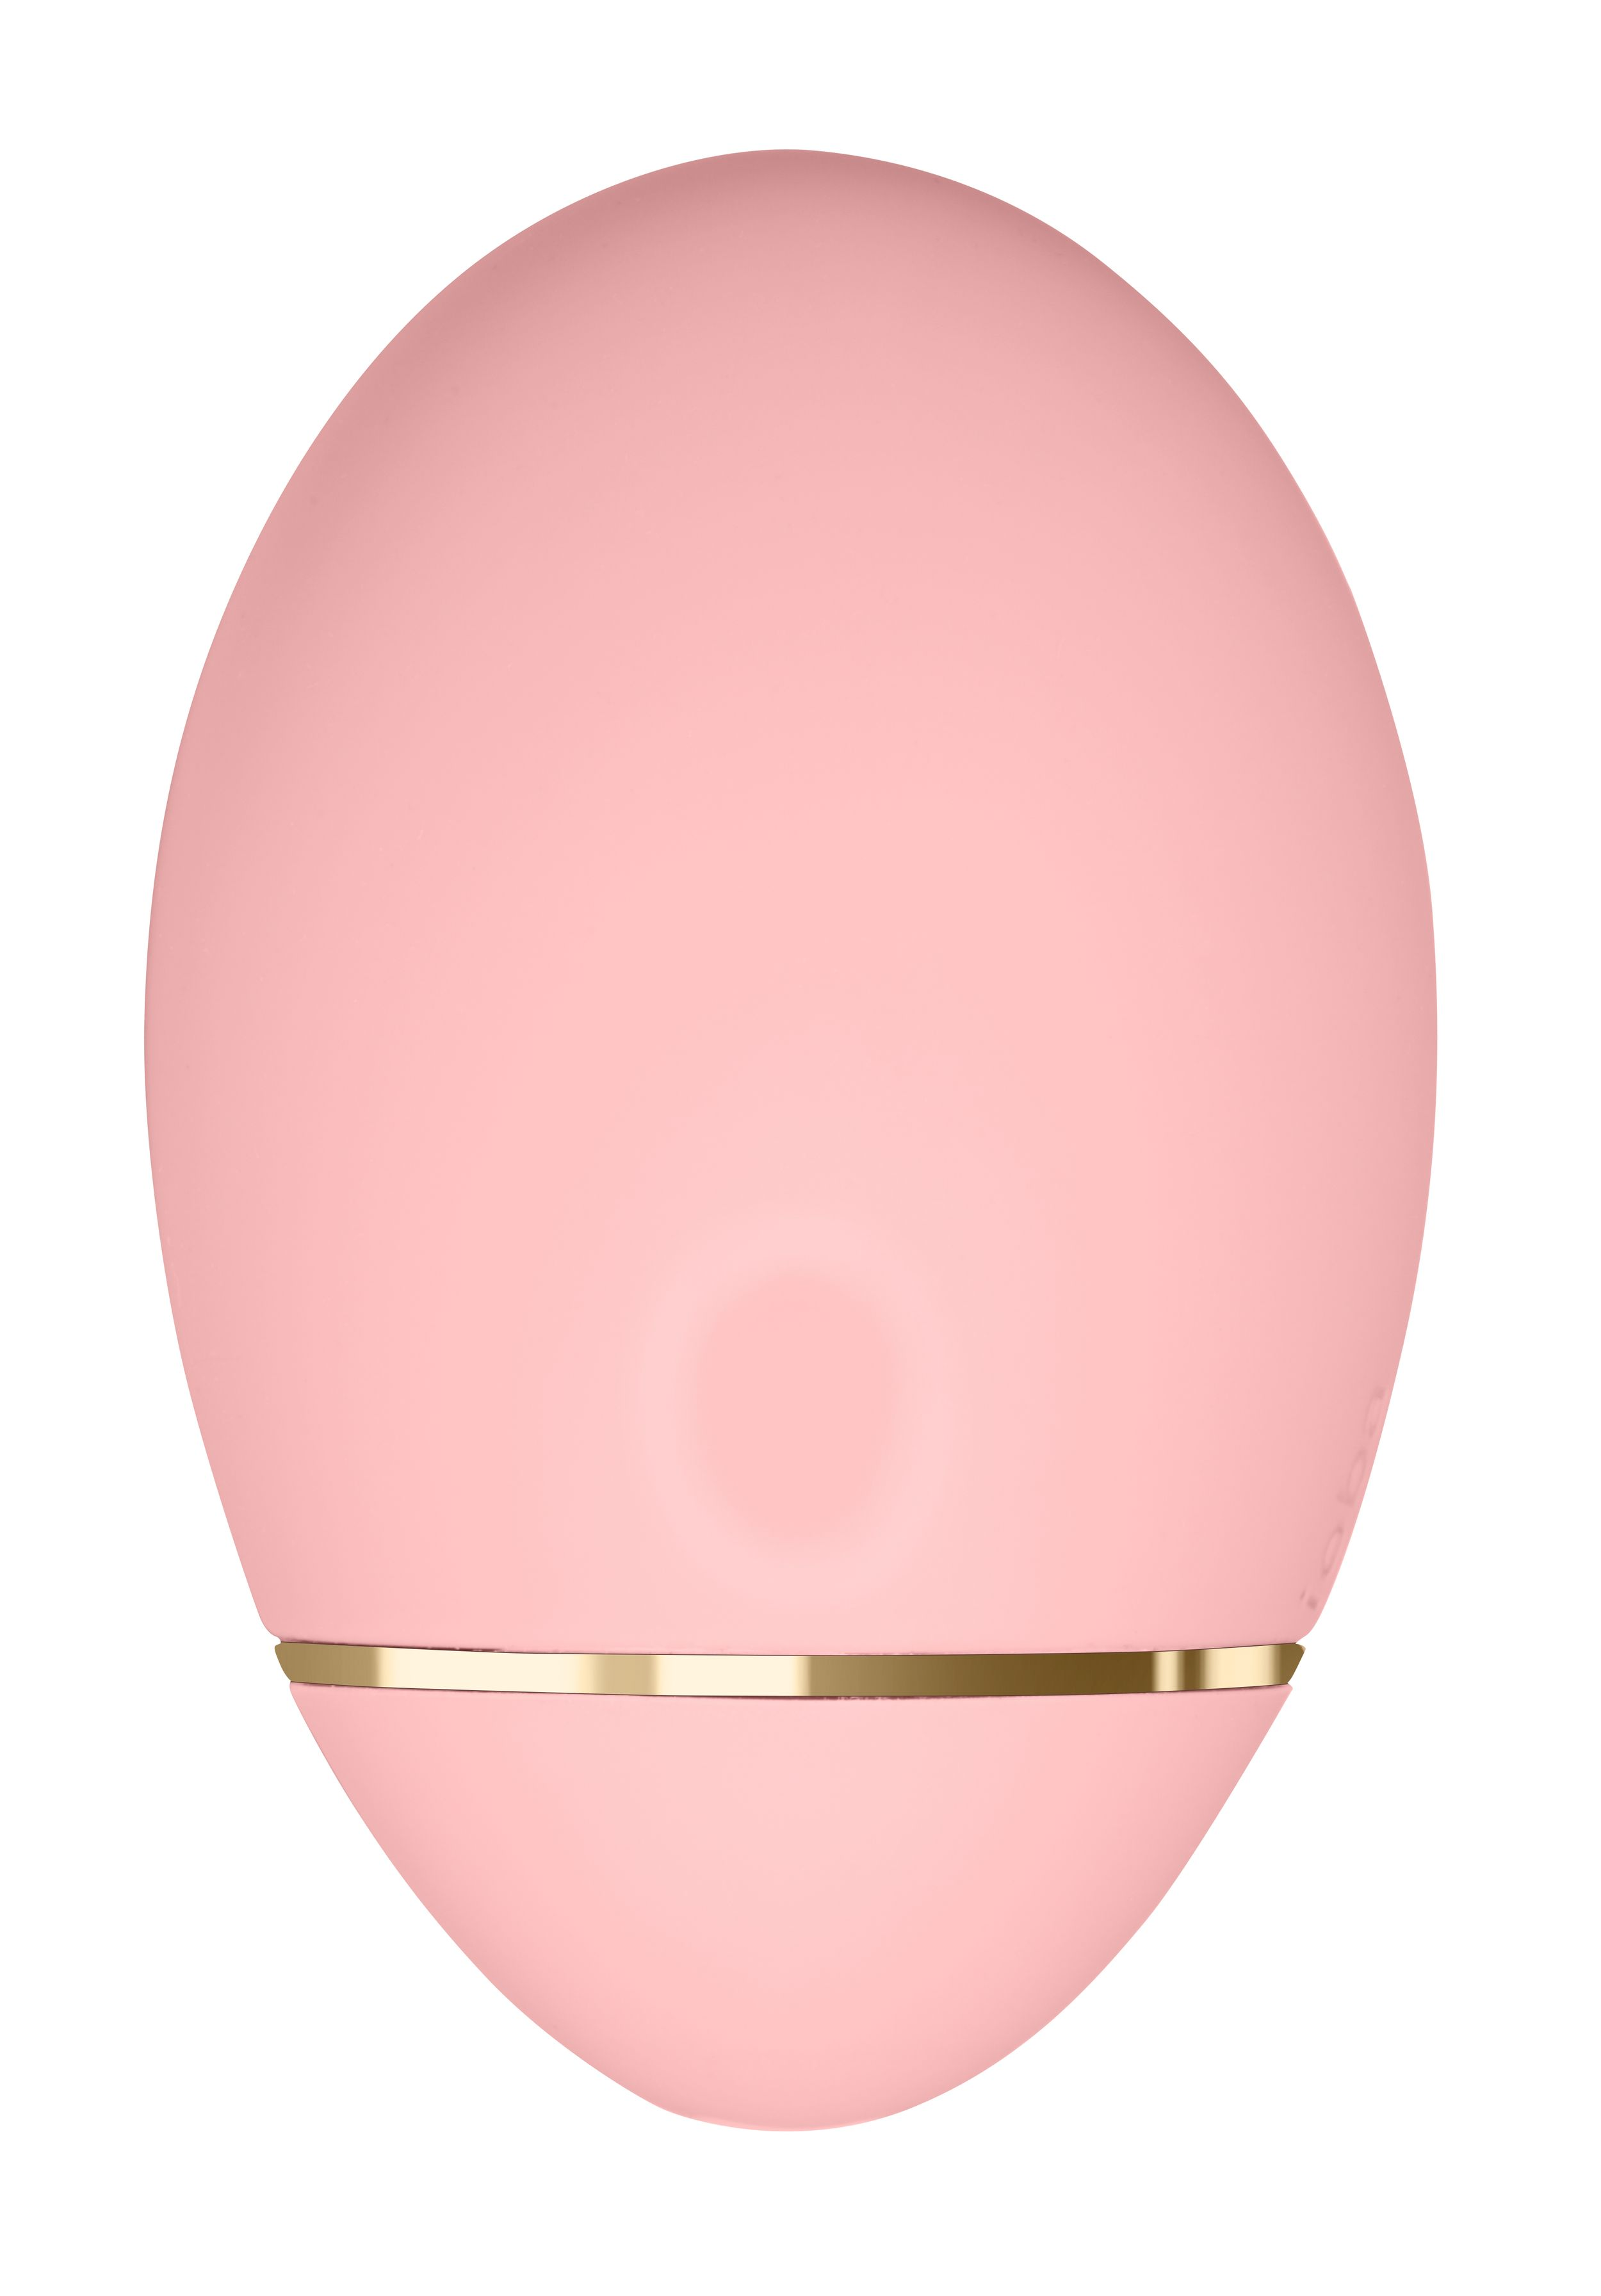 Roze auflegevibratoren TOYS Clitoris - Stimulator OhMyC 1 IOBA